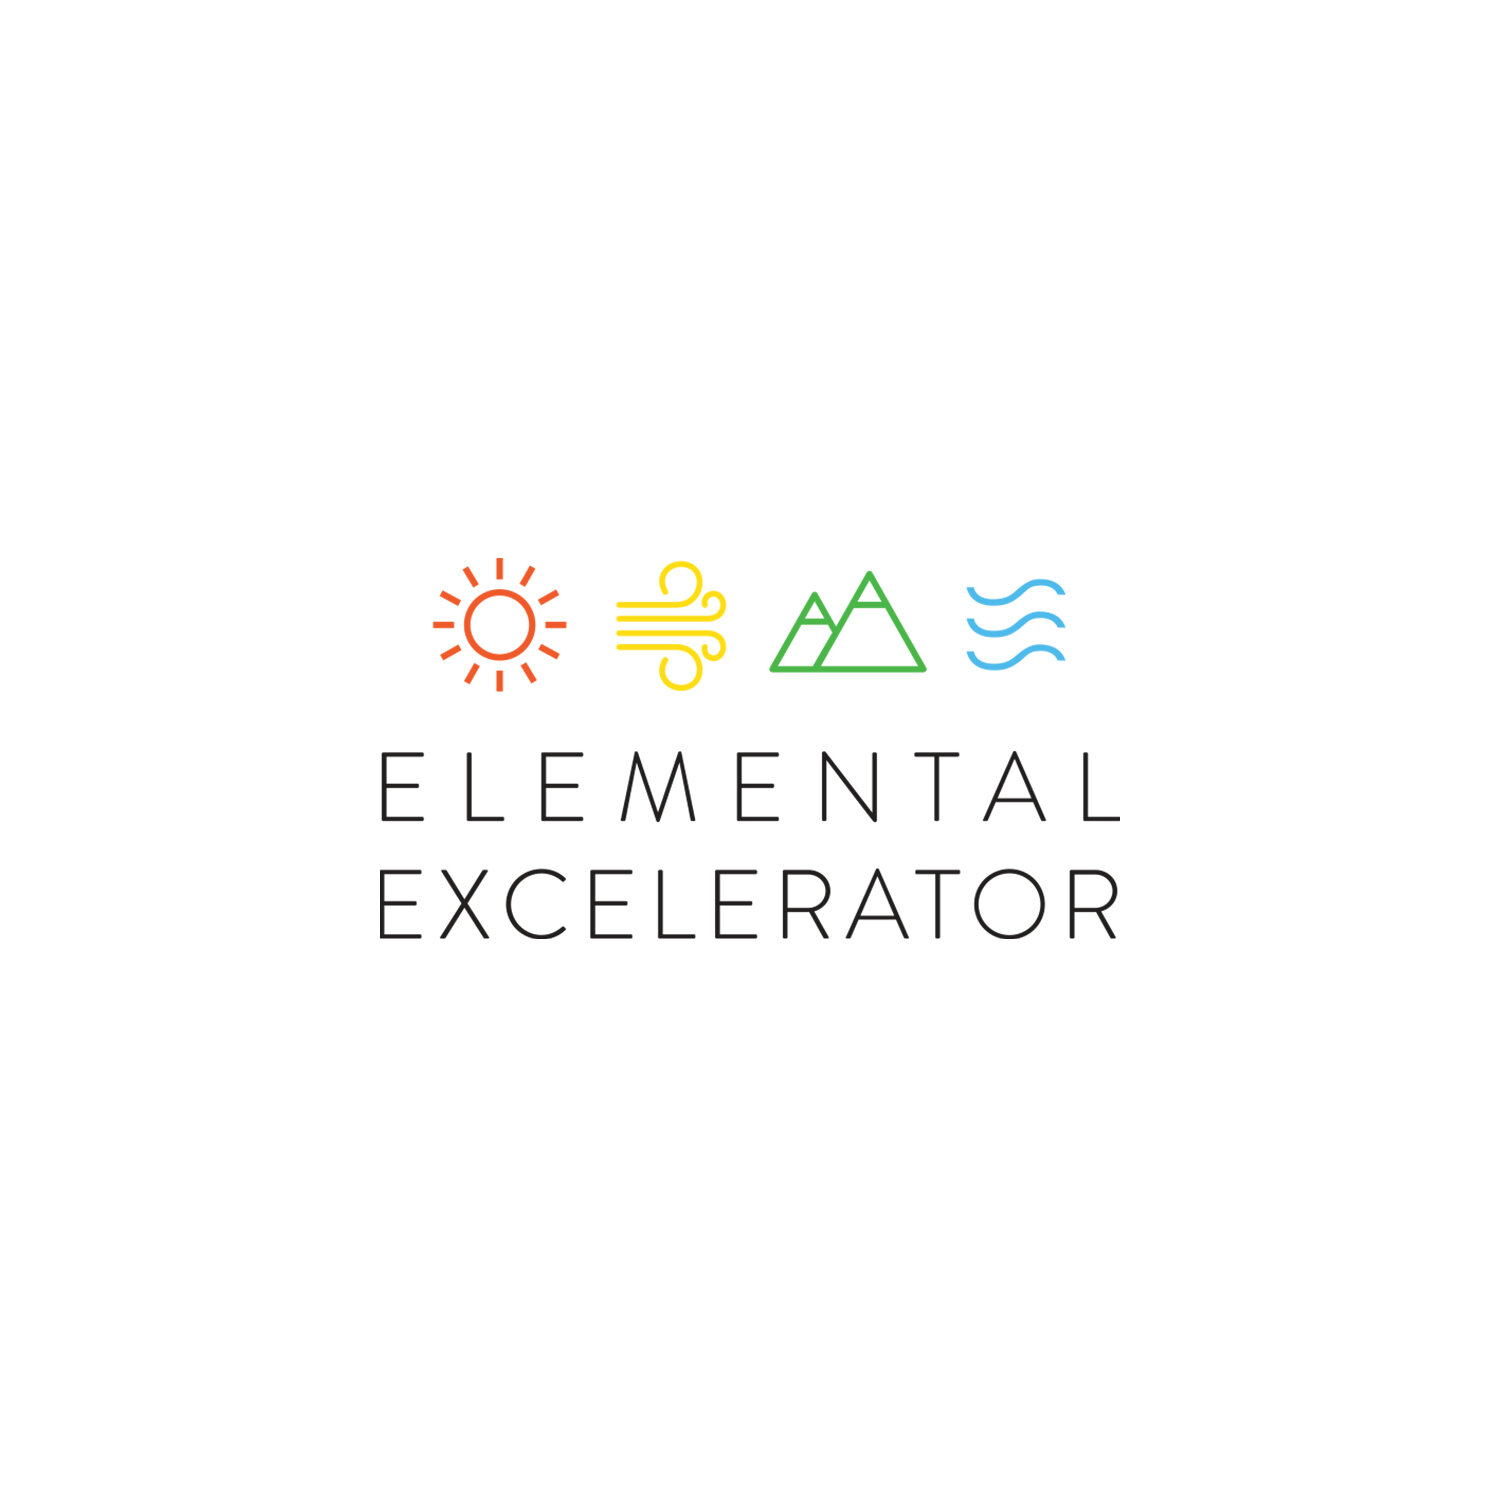 elemental-excelerator-logo-1500px.jpg